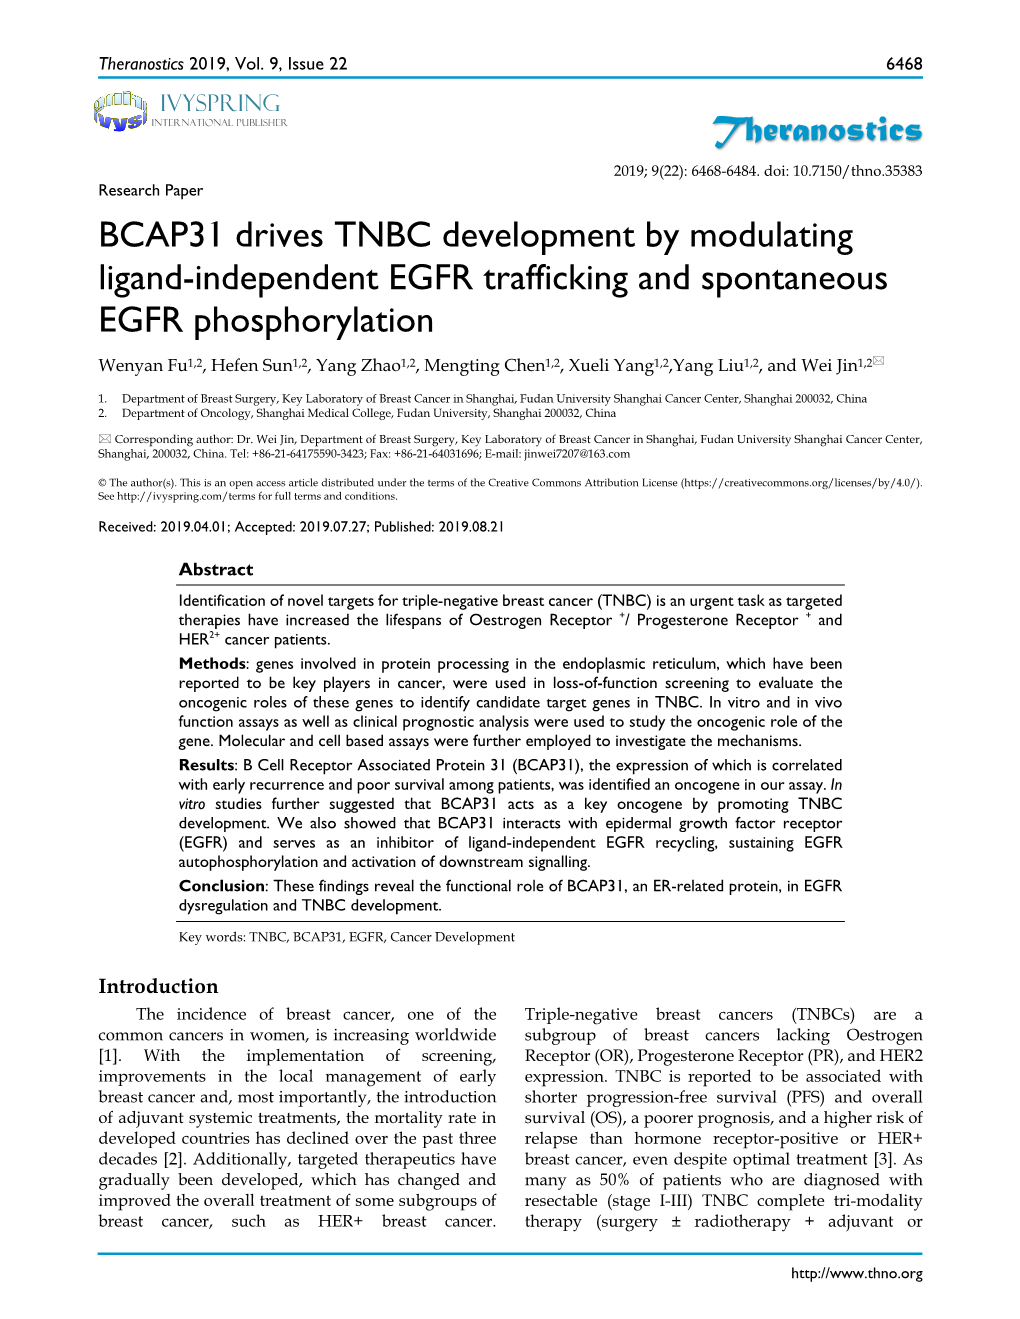 BCAP31 Drives TNBC Development by Modulating Ligand-Independent